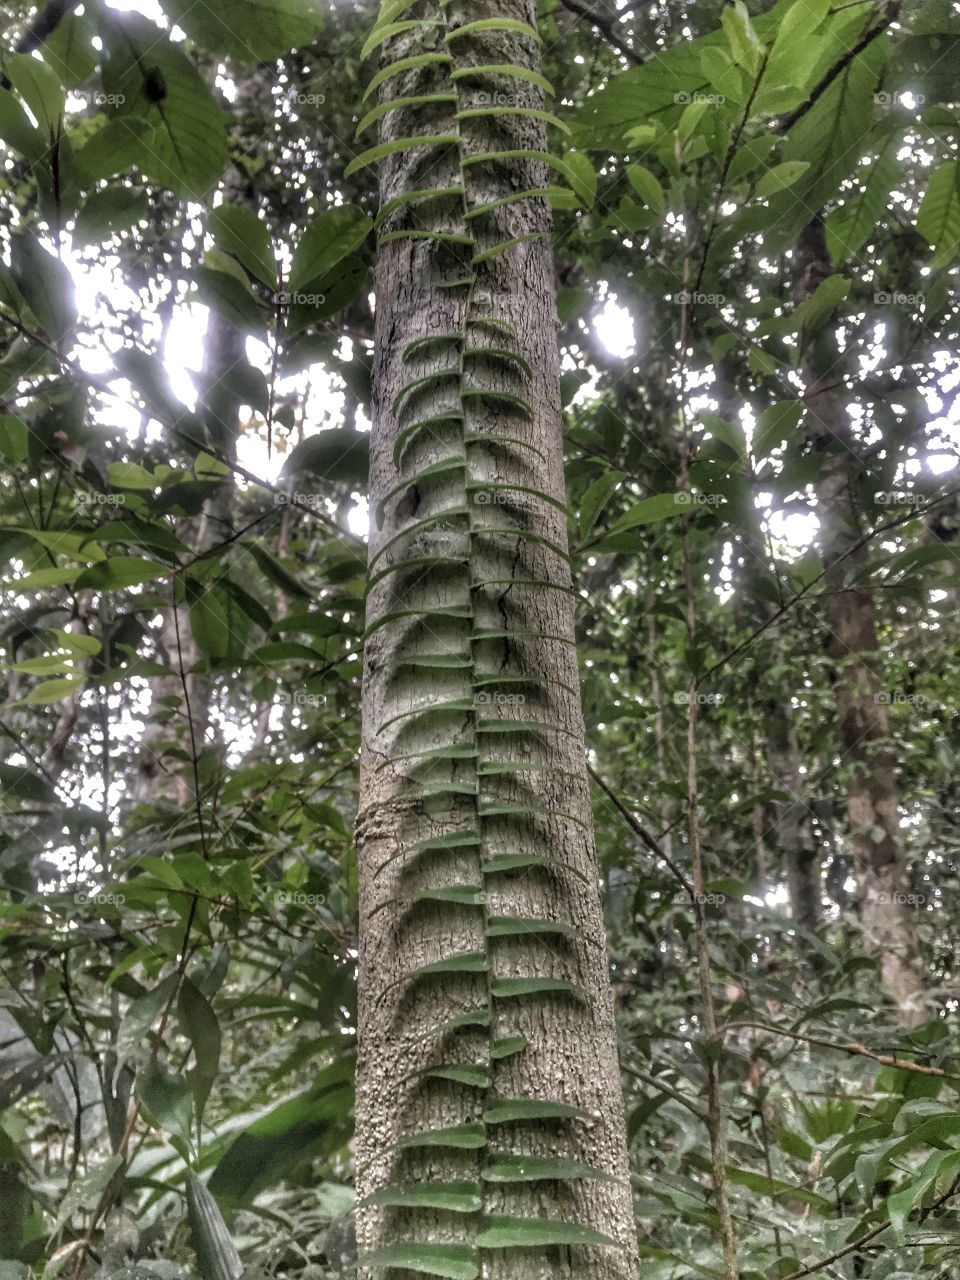 Vine pattern on tree. Amazon rainforest in Ecuador